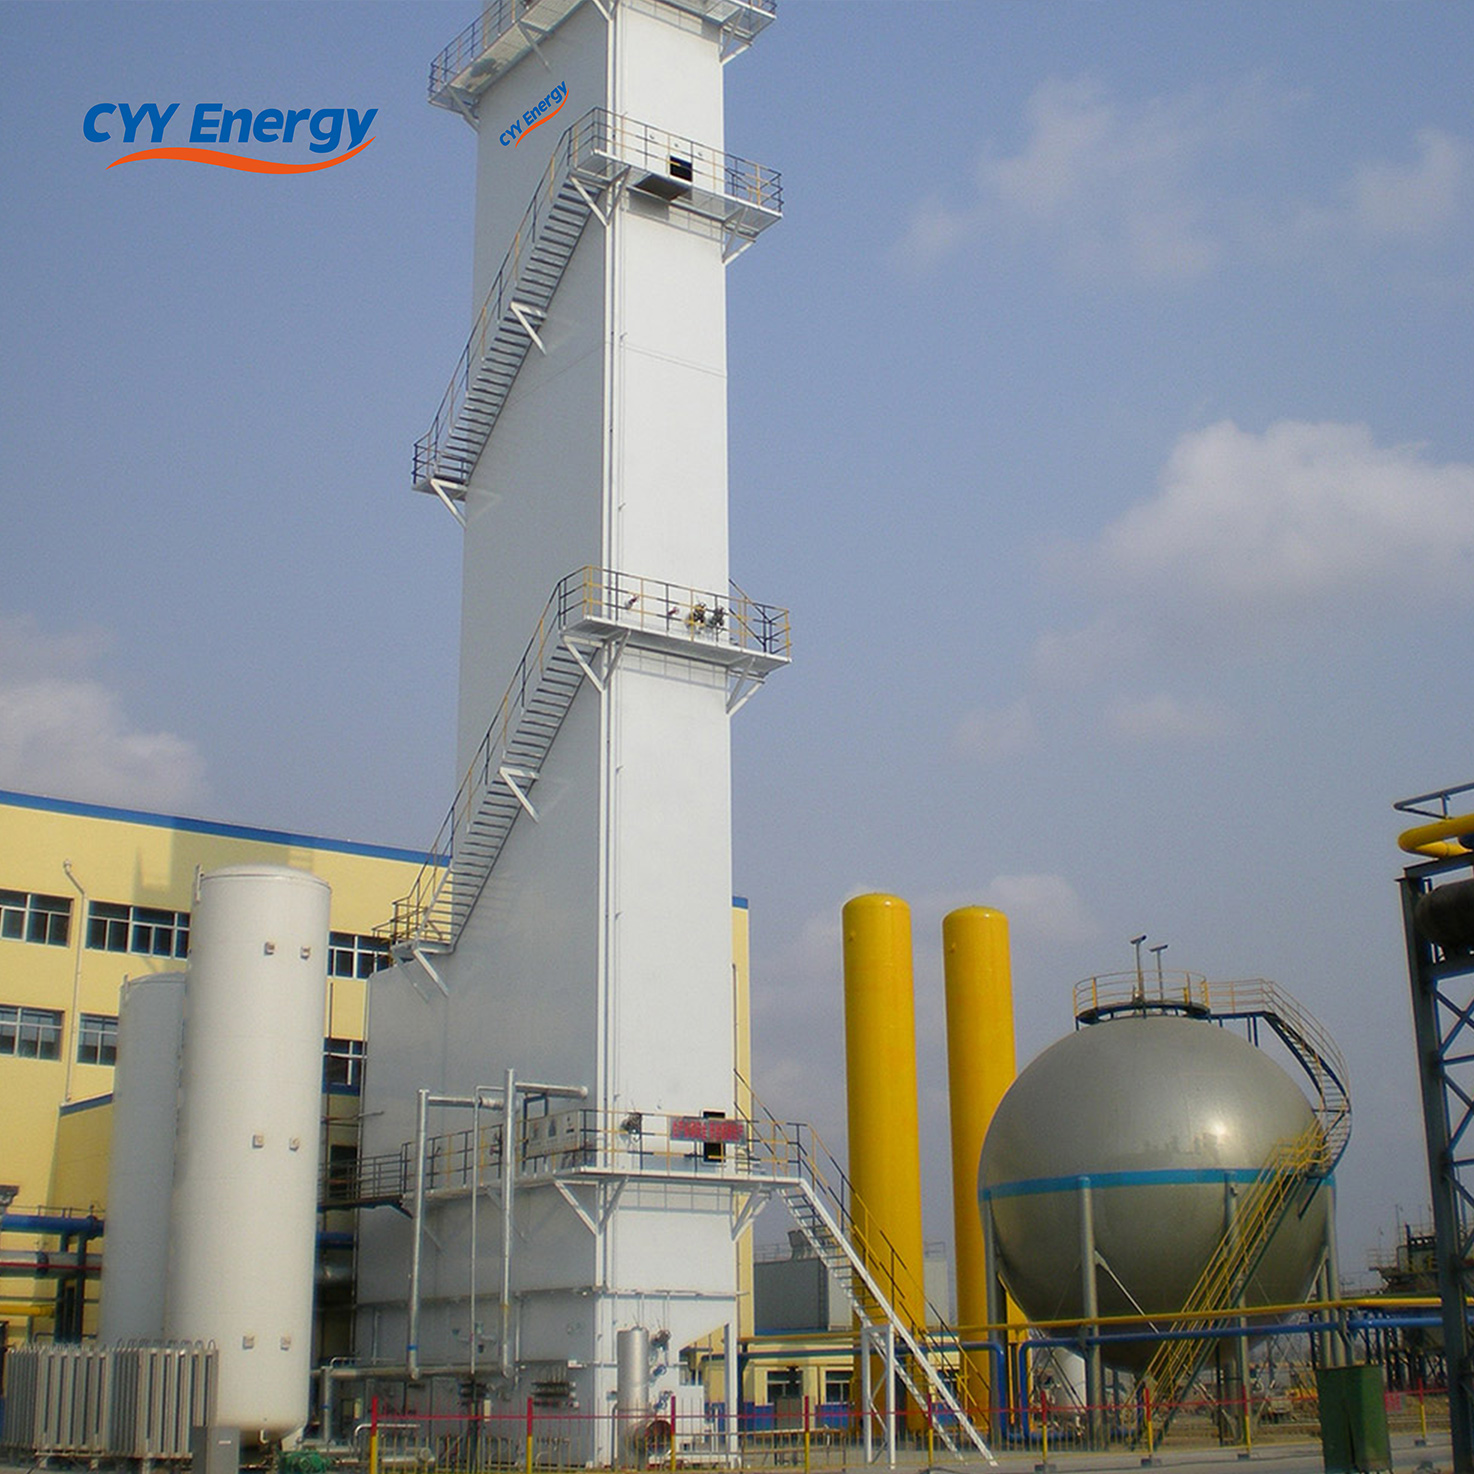 150nm3/h cryogenic air separation plant